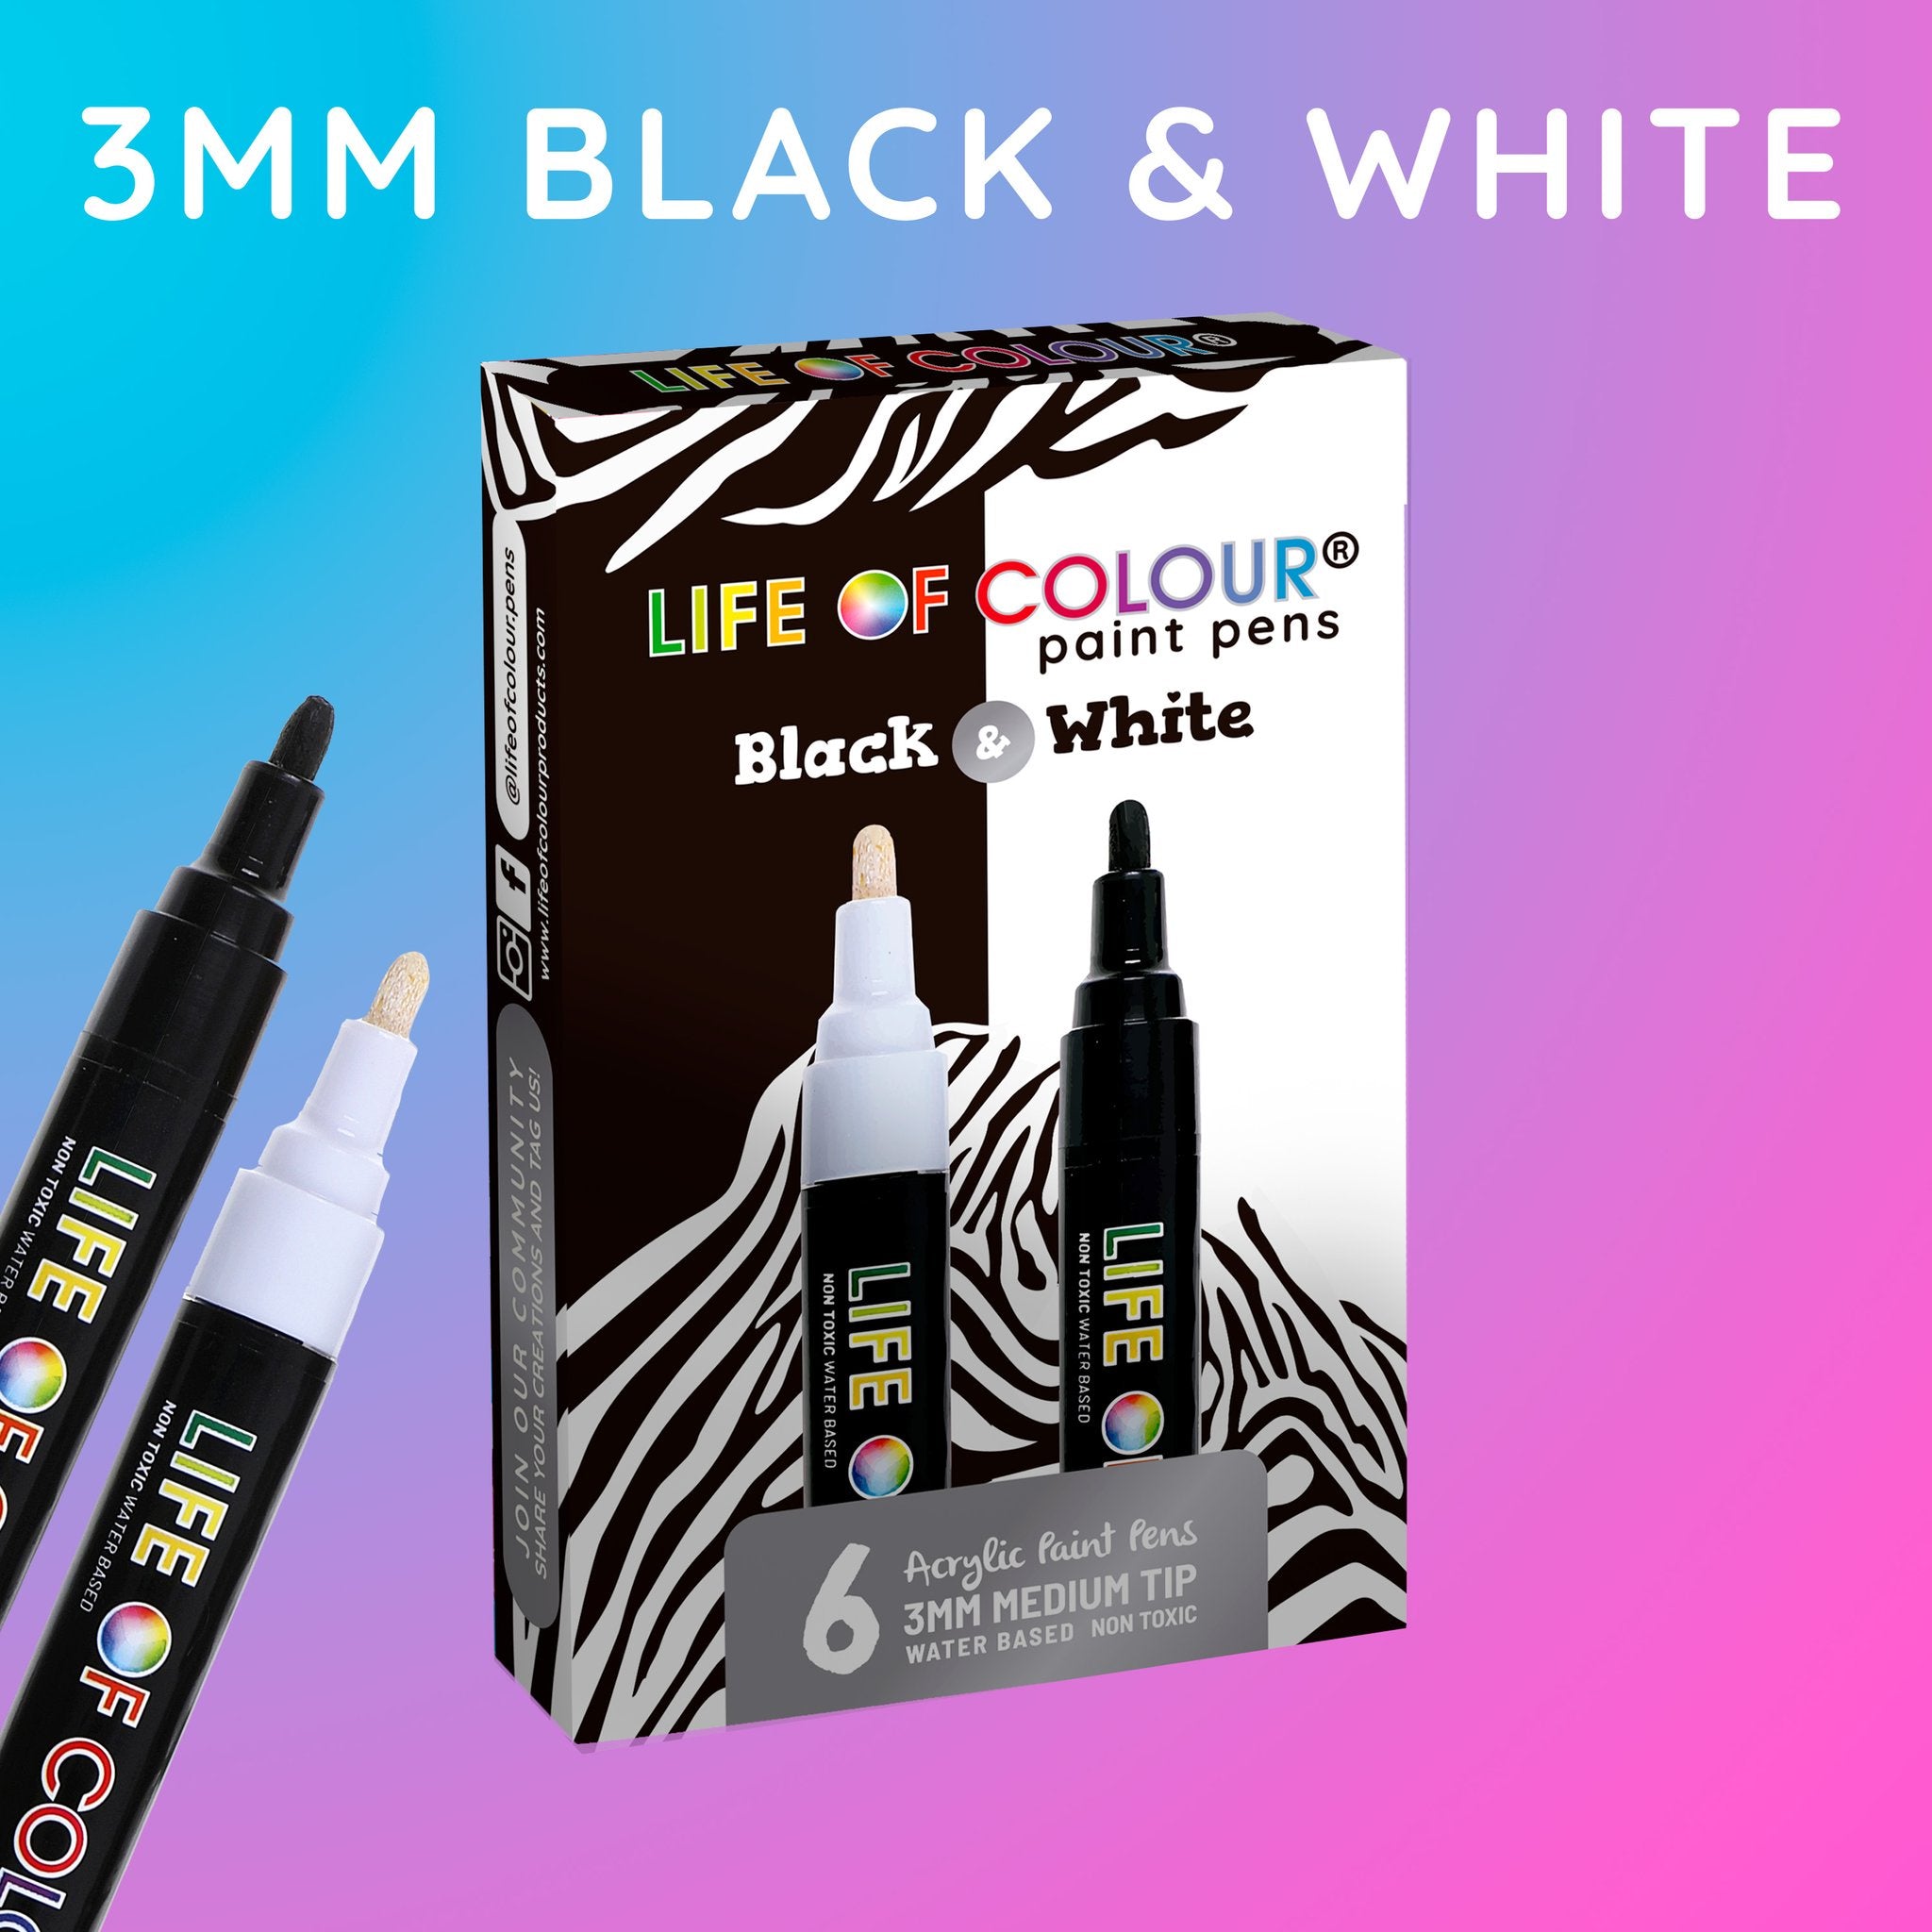 Black and White Paint Pens - Medium Tip (3mm)